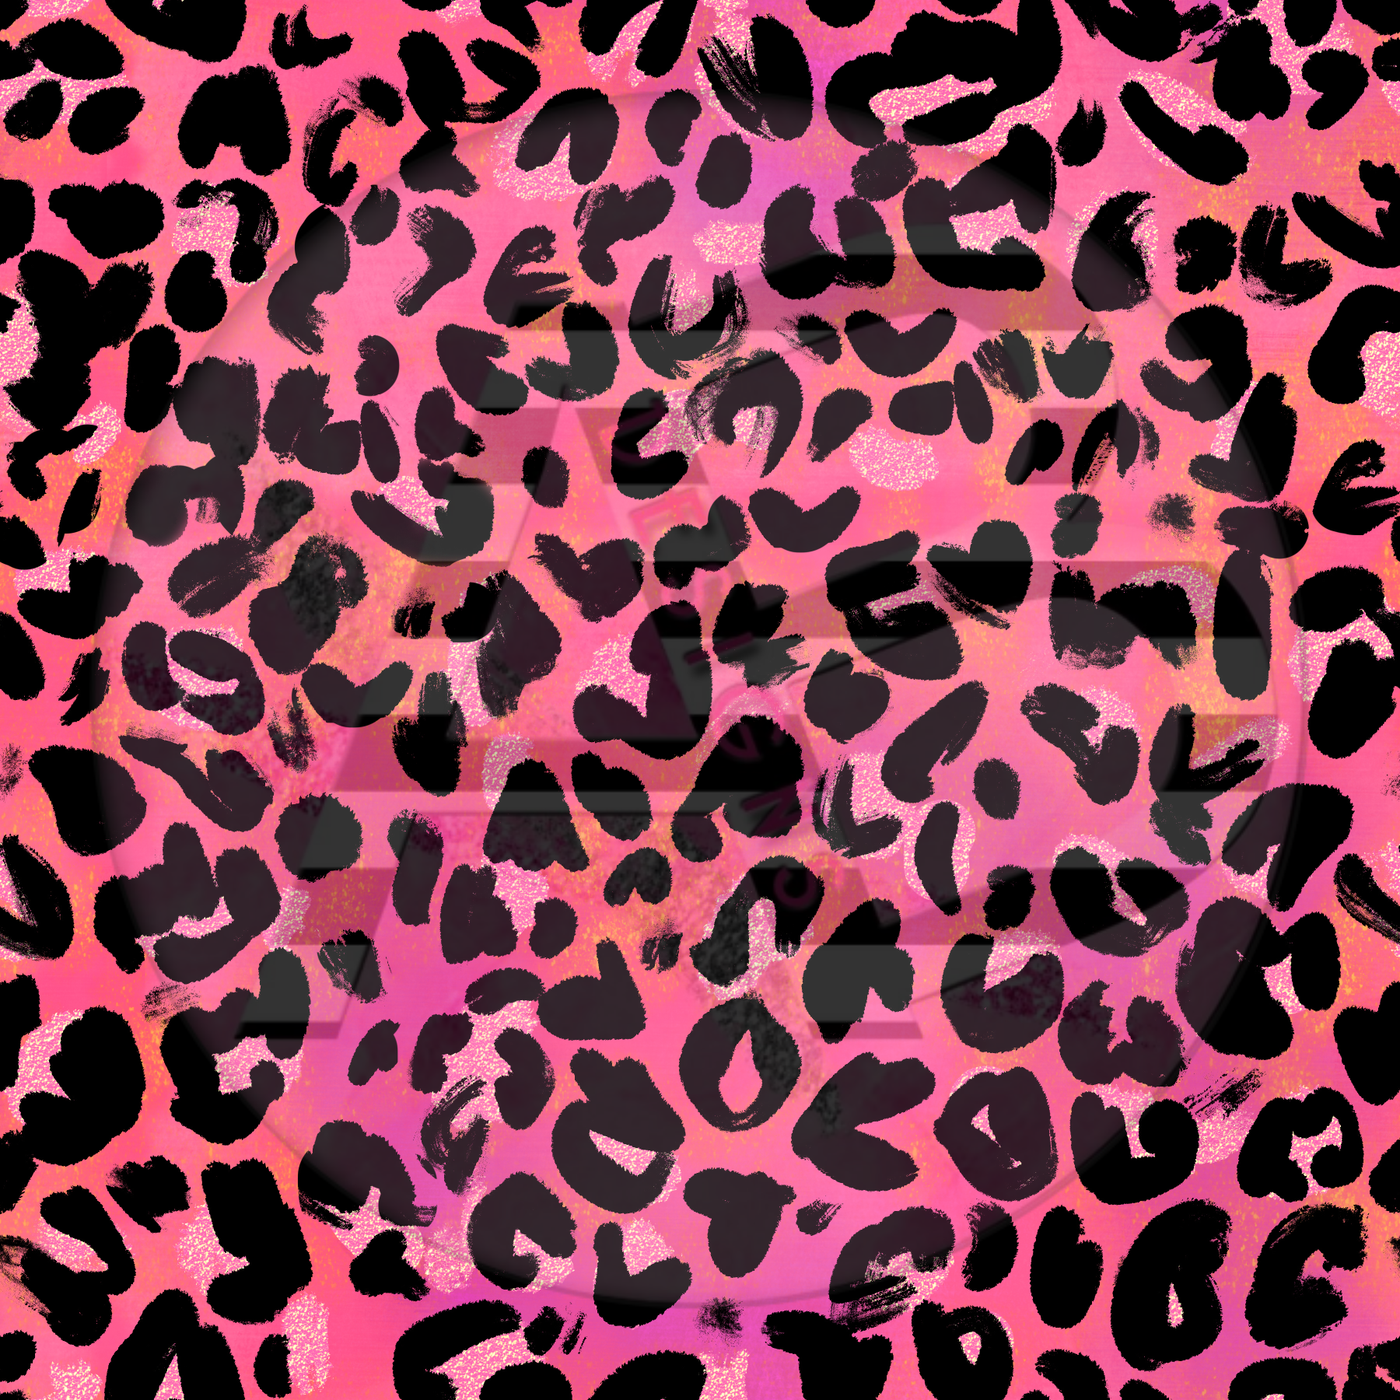 Adhesive Patterned Vinyl - Cheetah 18